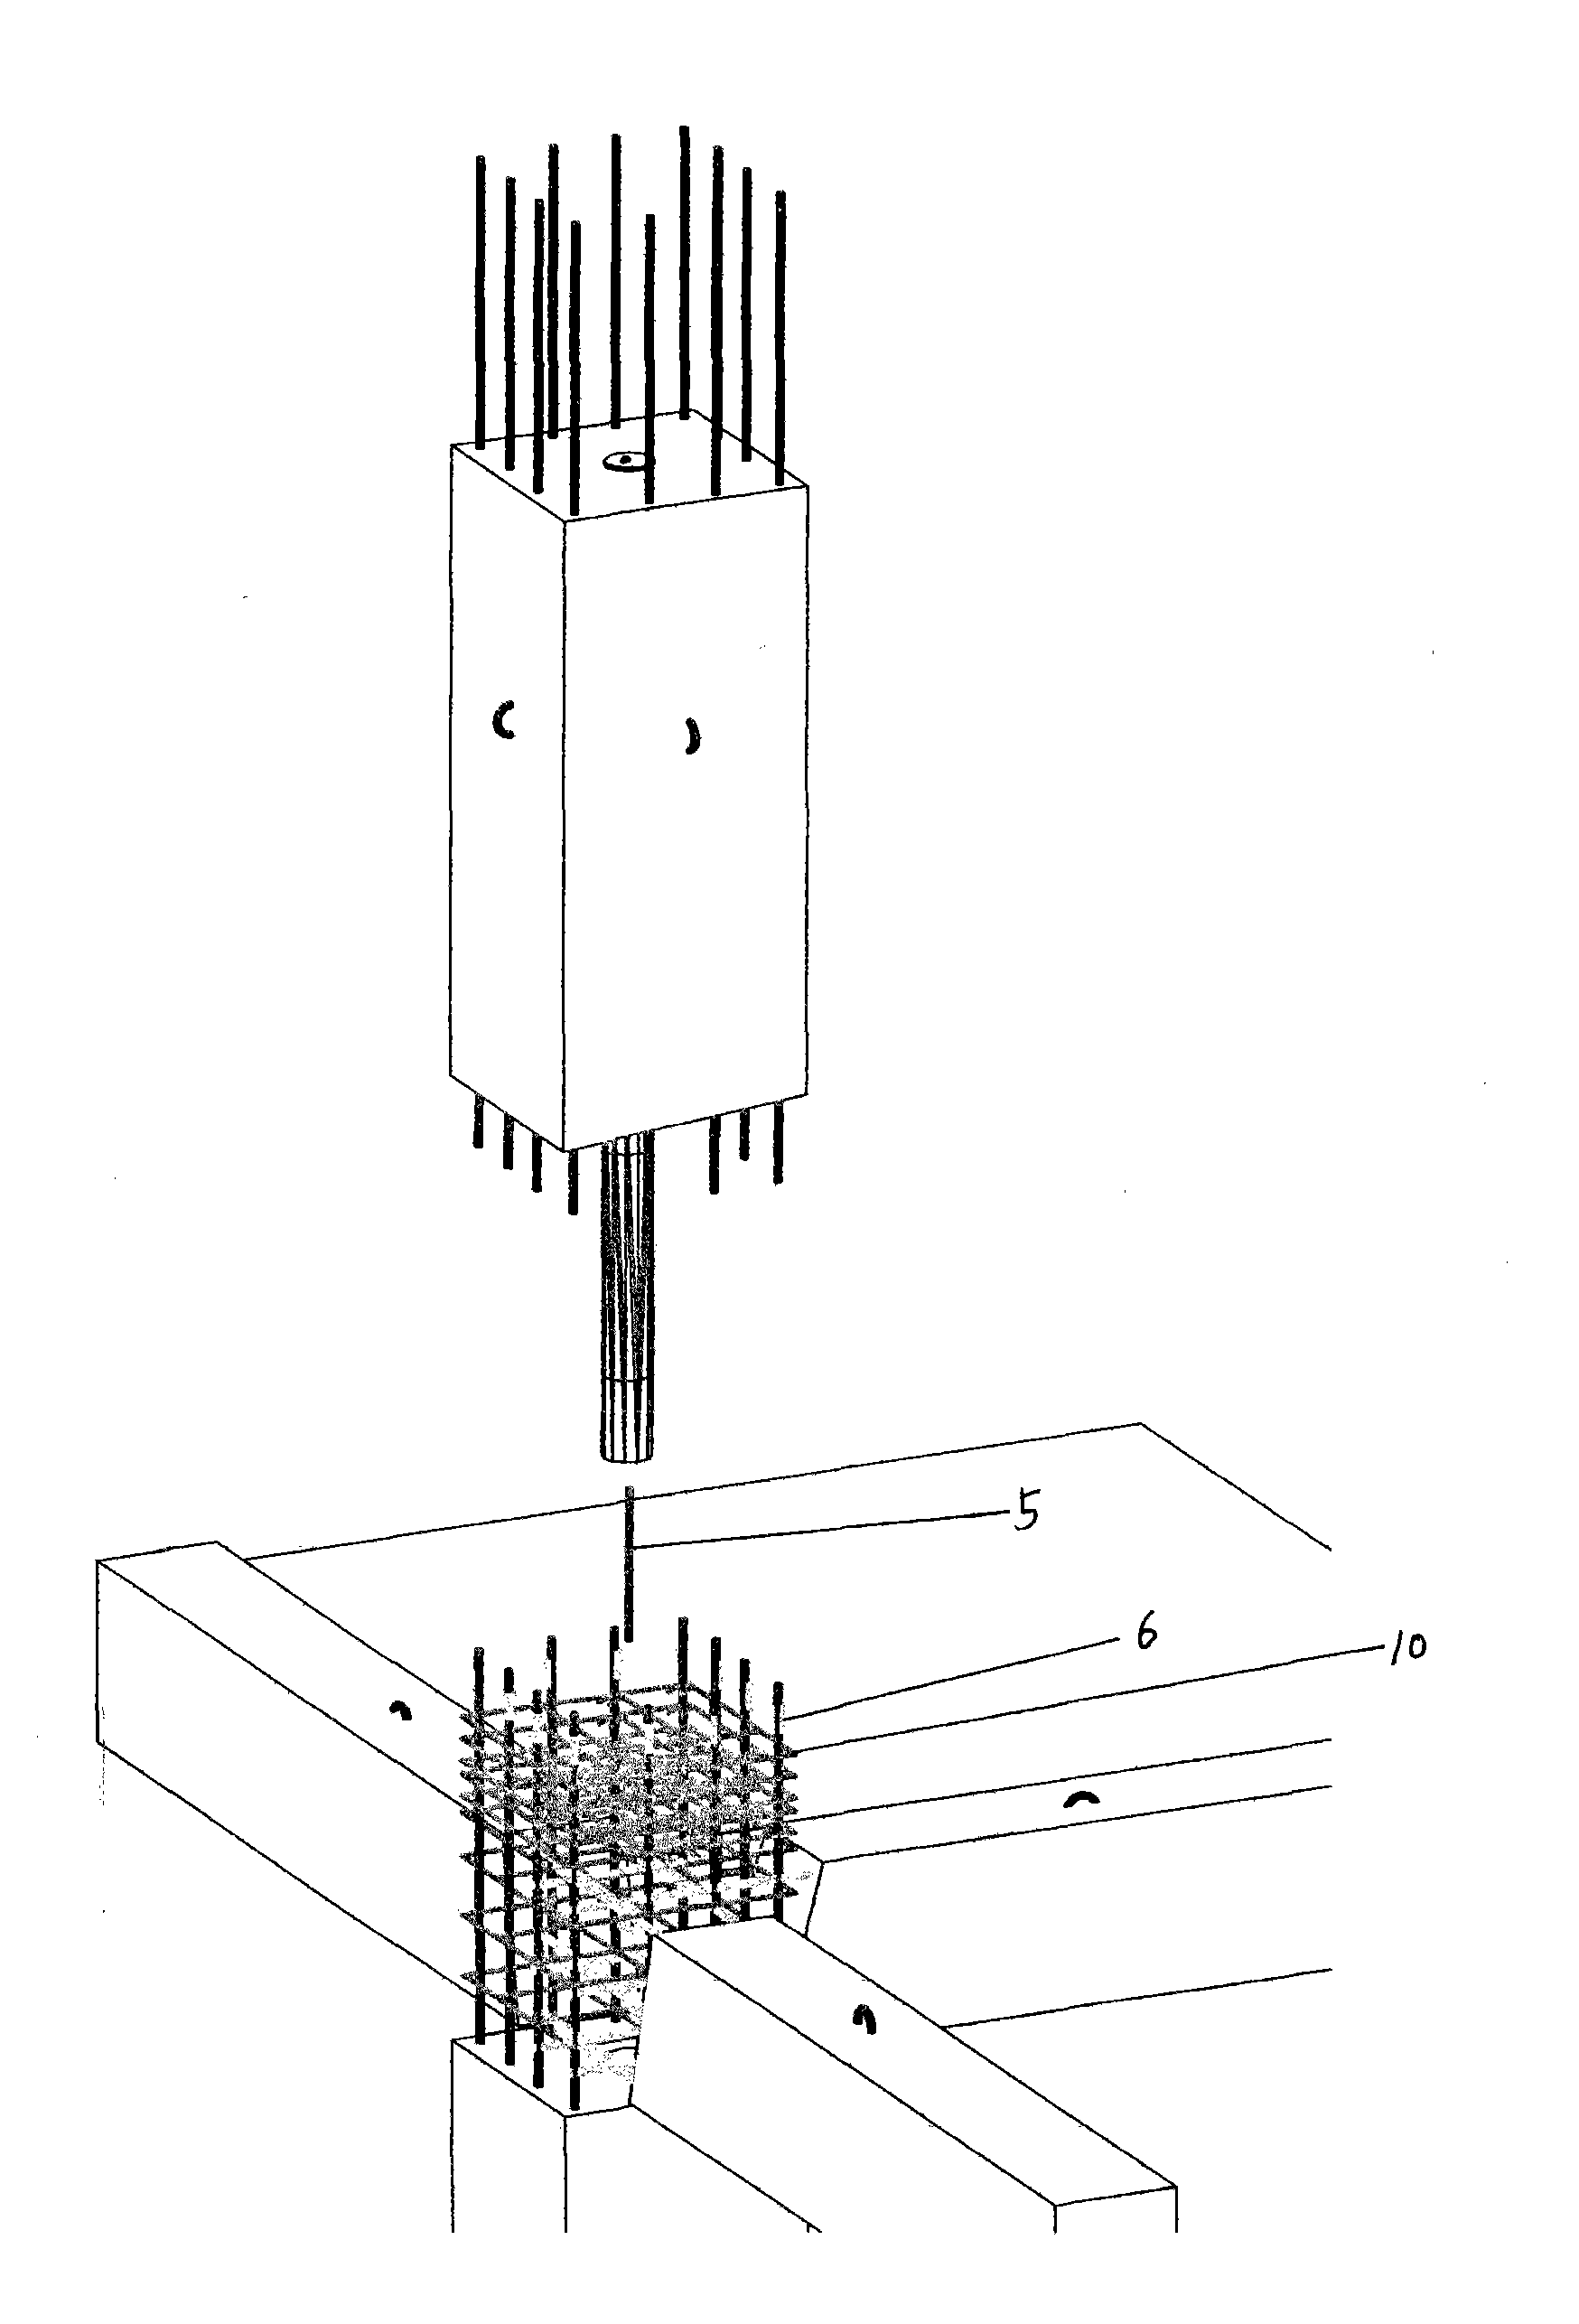 Prefabricated vertical member